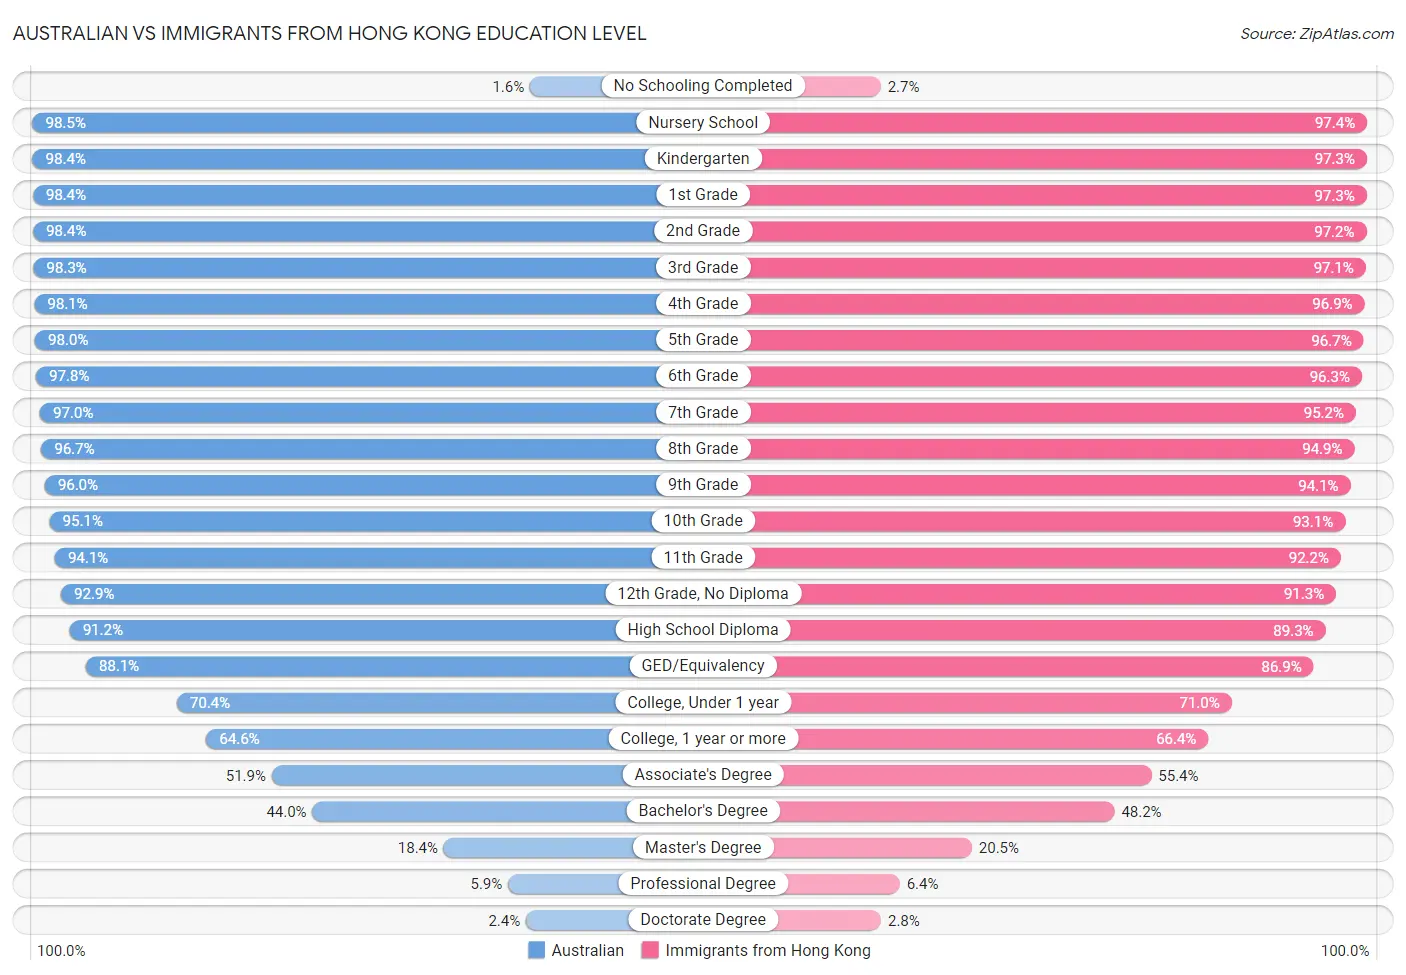 Australian vs Immigrants from Hong Kong Education Level